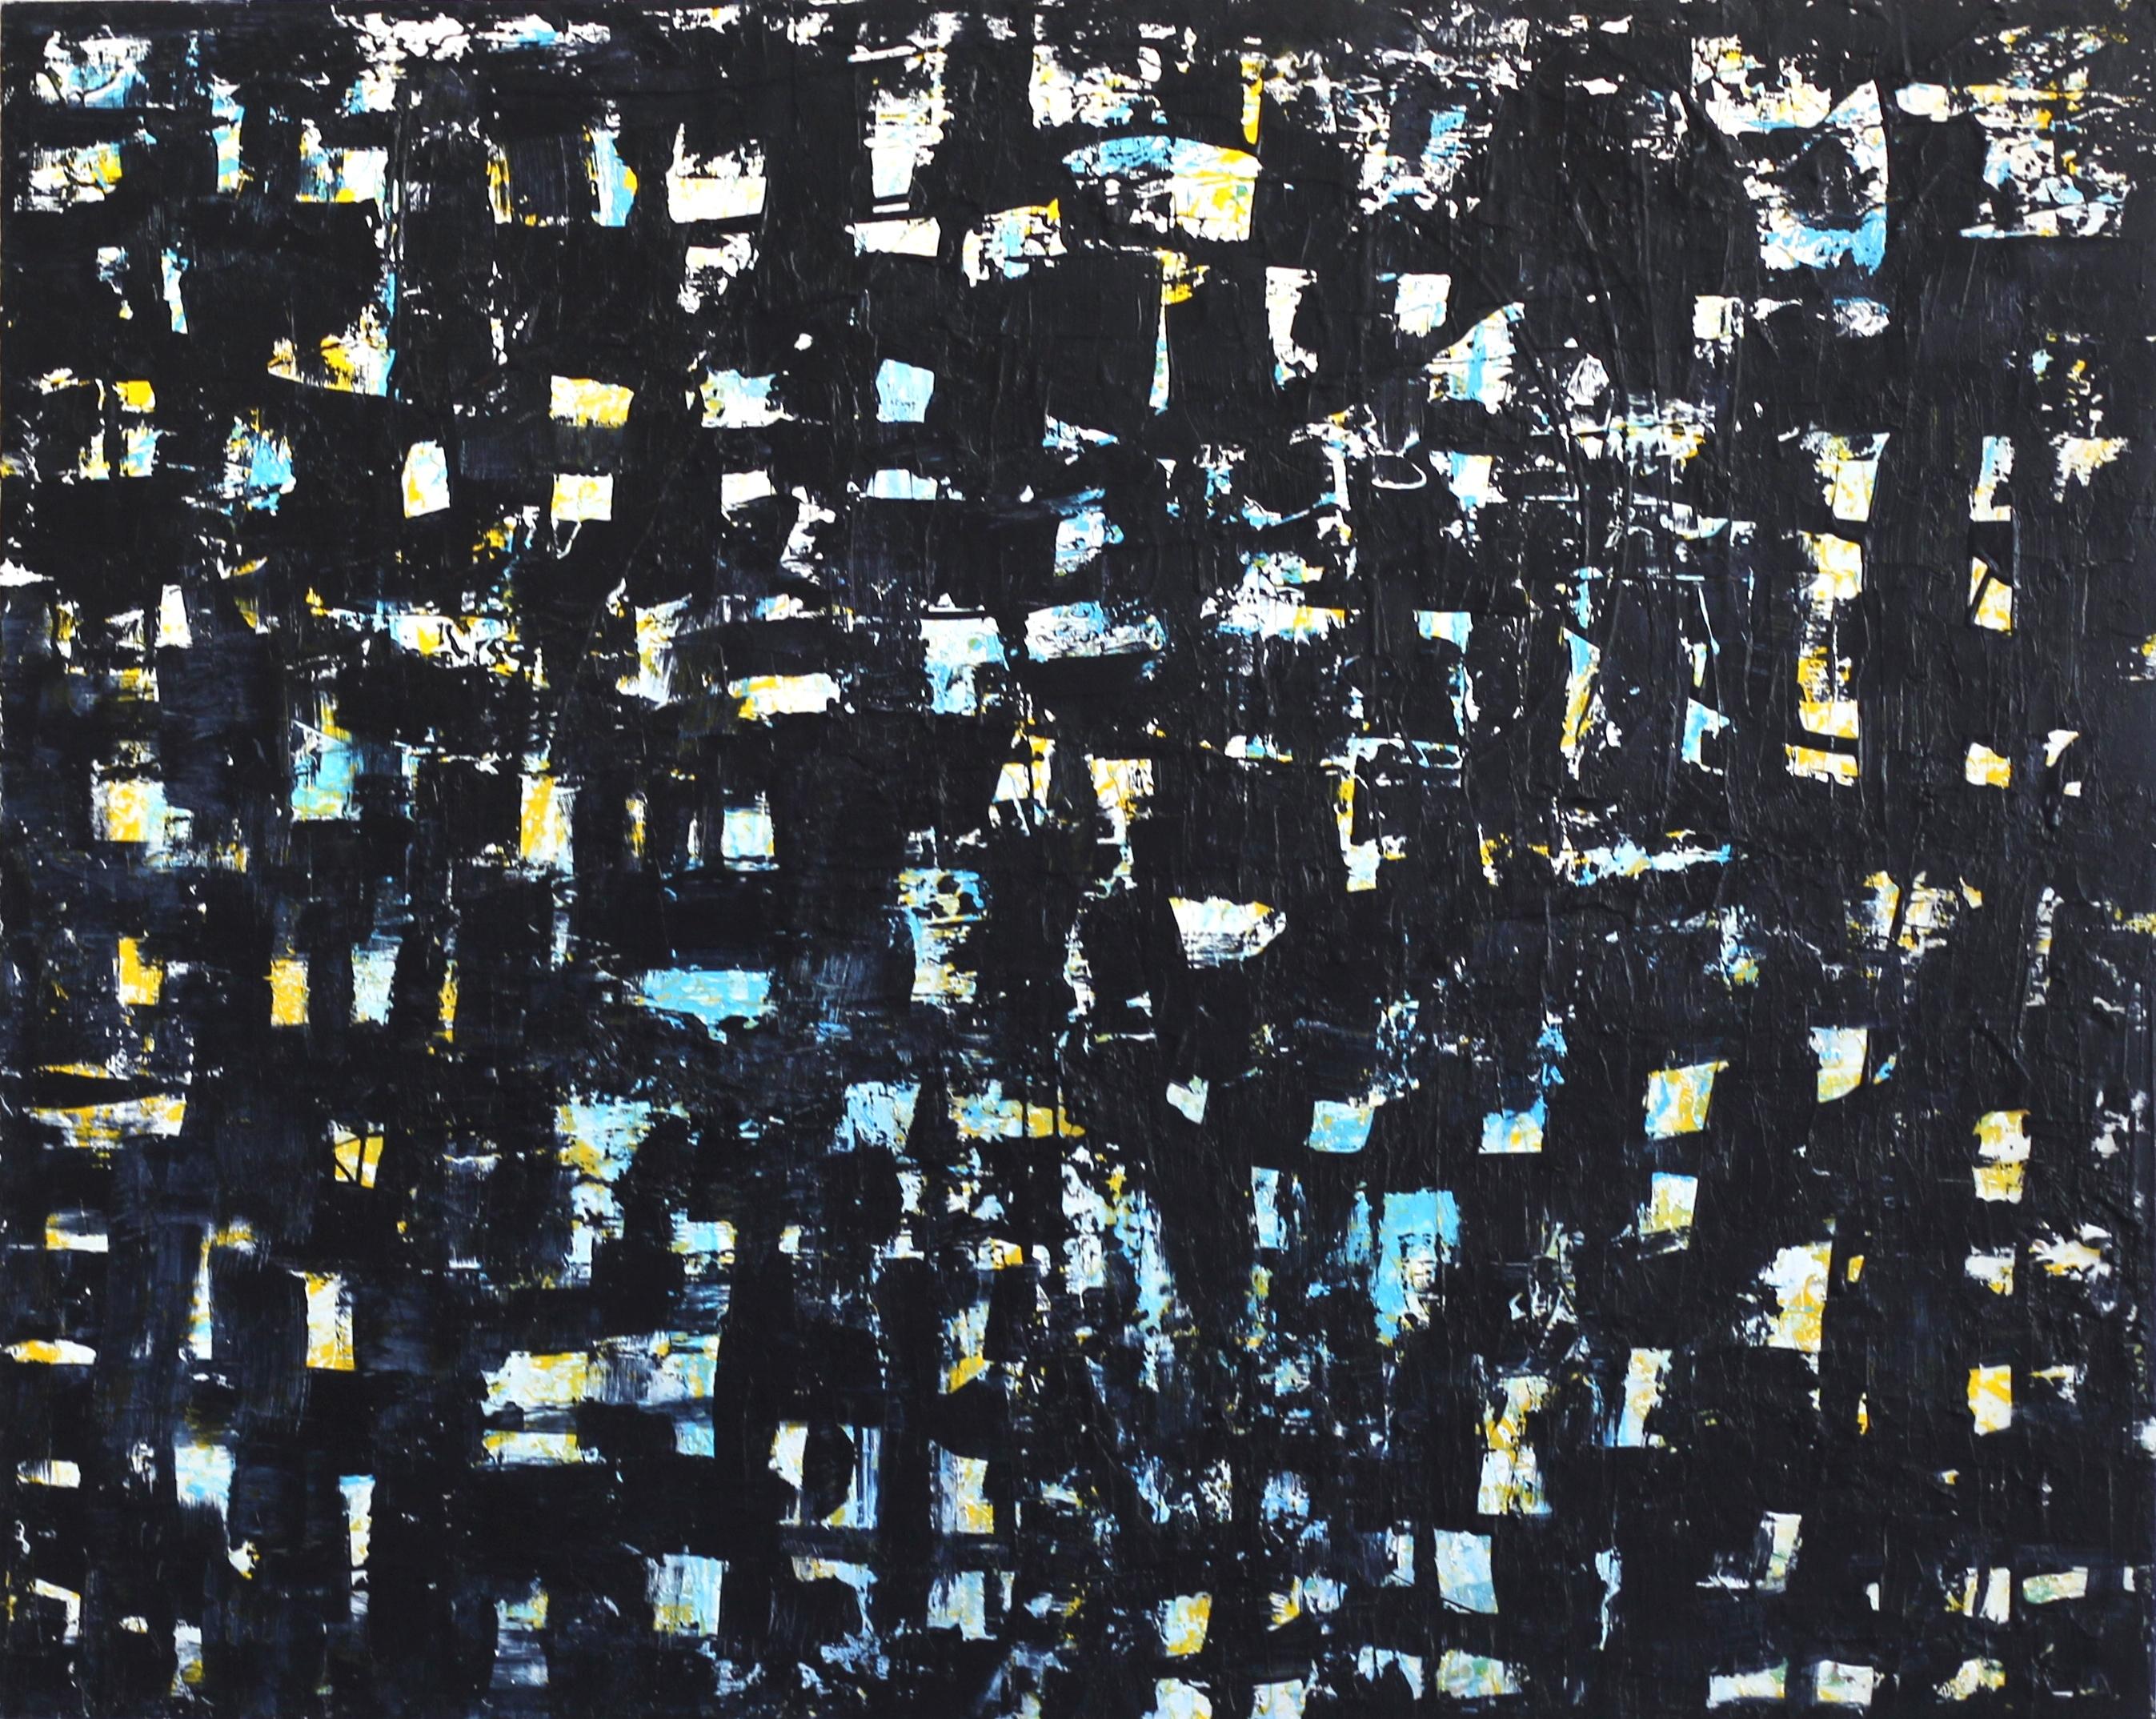 Pastel Blue - Large Abstract Original Mixed Media Painting - Mixed Media Art by Clara Berta